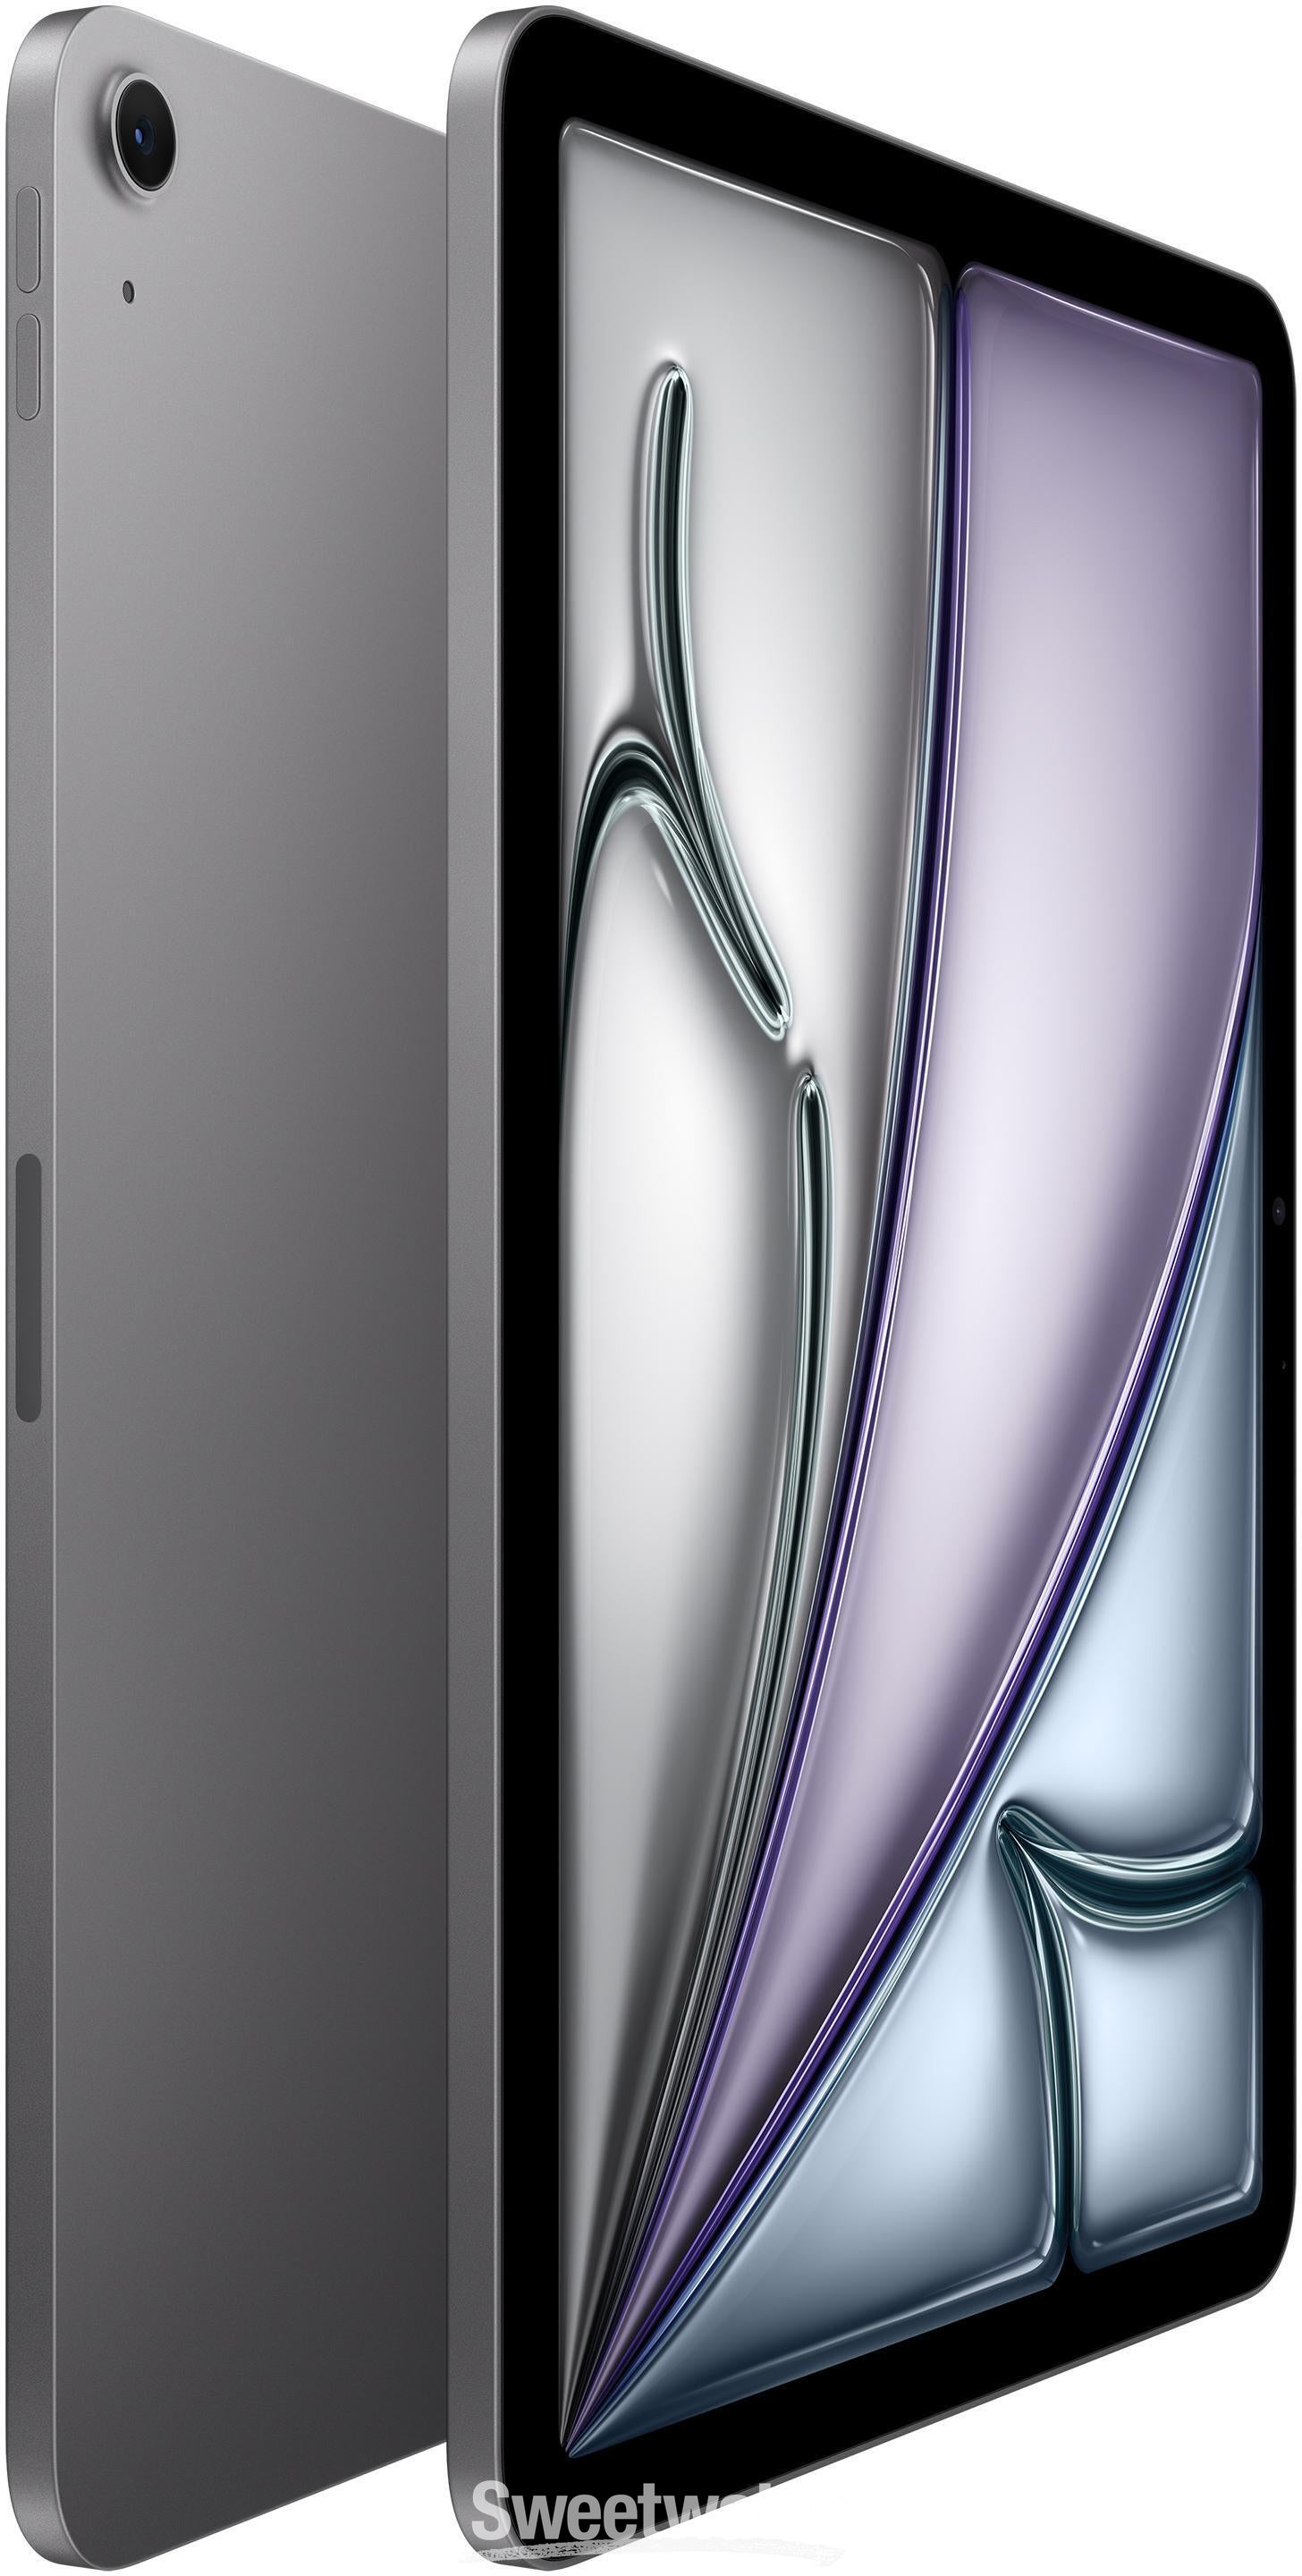 Apple 11-inch iPad Air Wi-Fi 256GB - Space Gray | Sweetwater